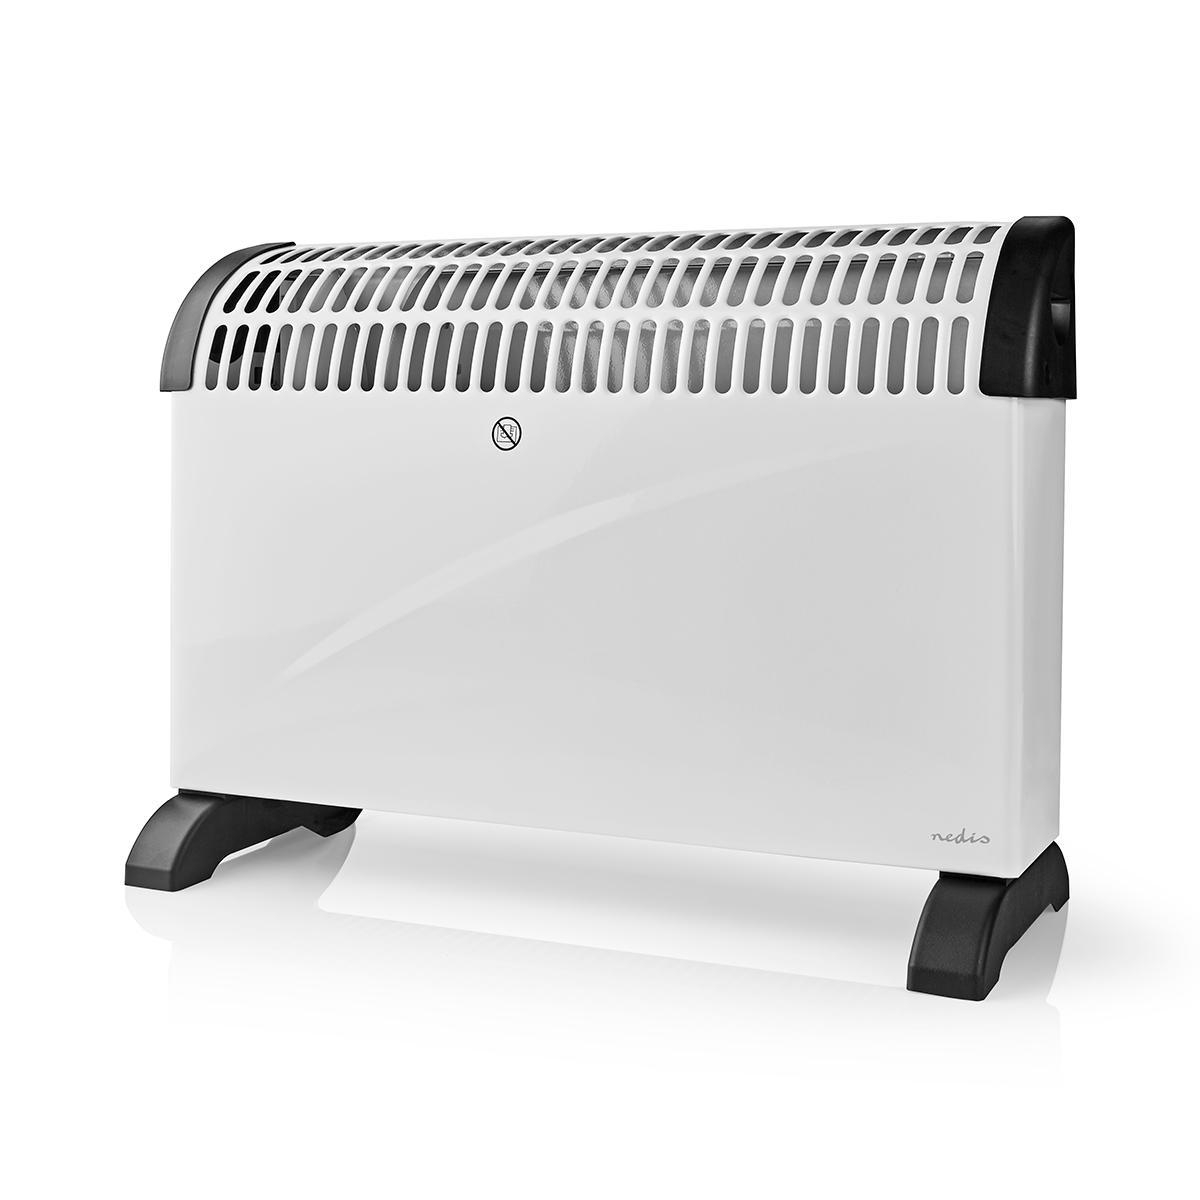 Nedis industrieheizlüfter termostato 2000w calefactor elektroheizer dispositivo calentador